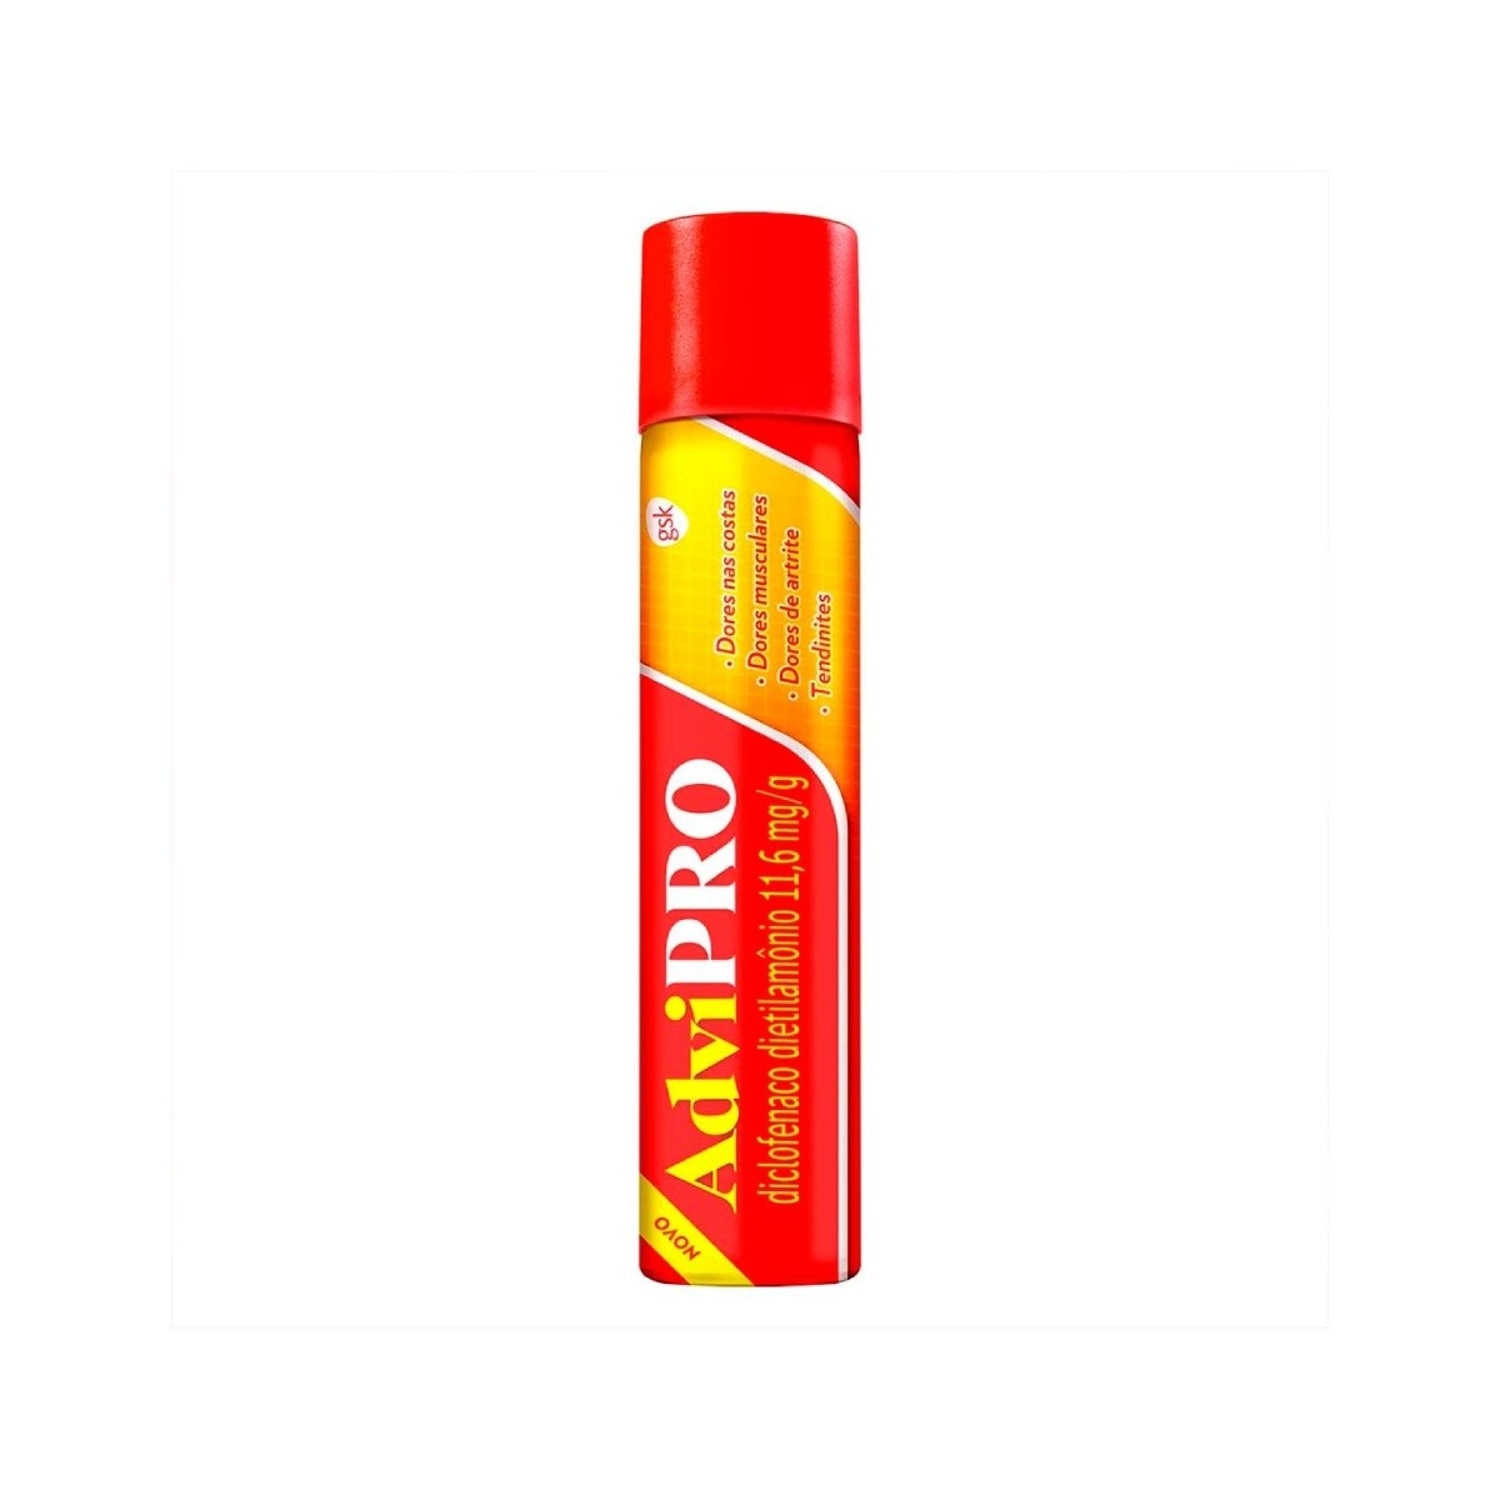 Advipro 11,6mg Spray 85ml